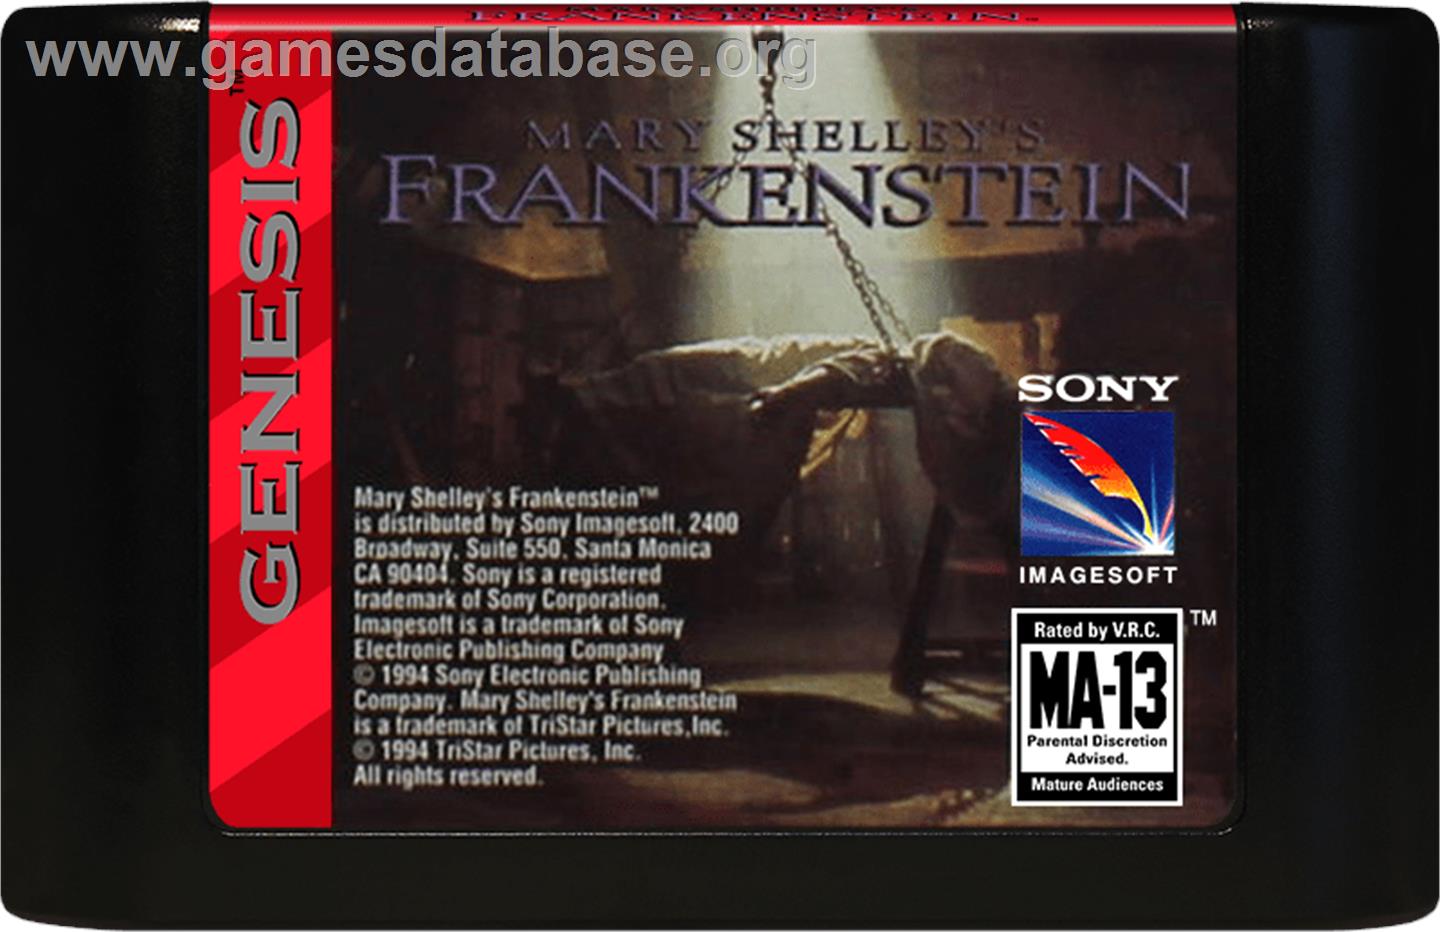 Mary Shelley's Frankenstein - Sega Genesis - Artwork - Cartridge